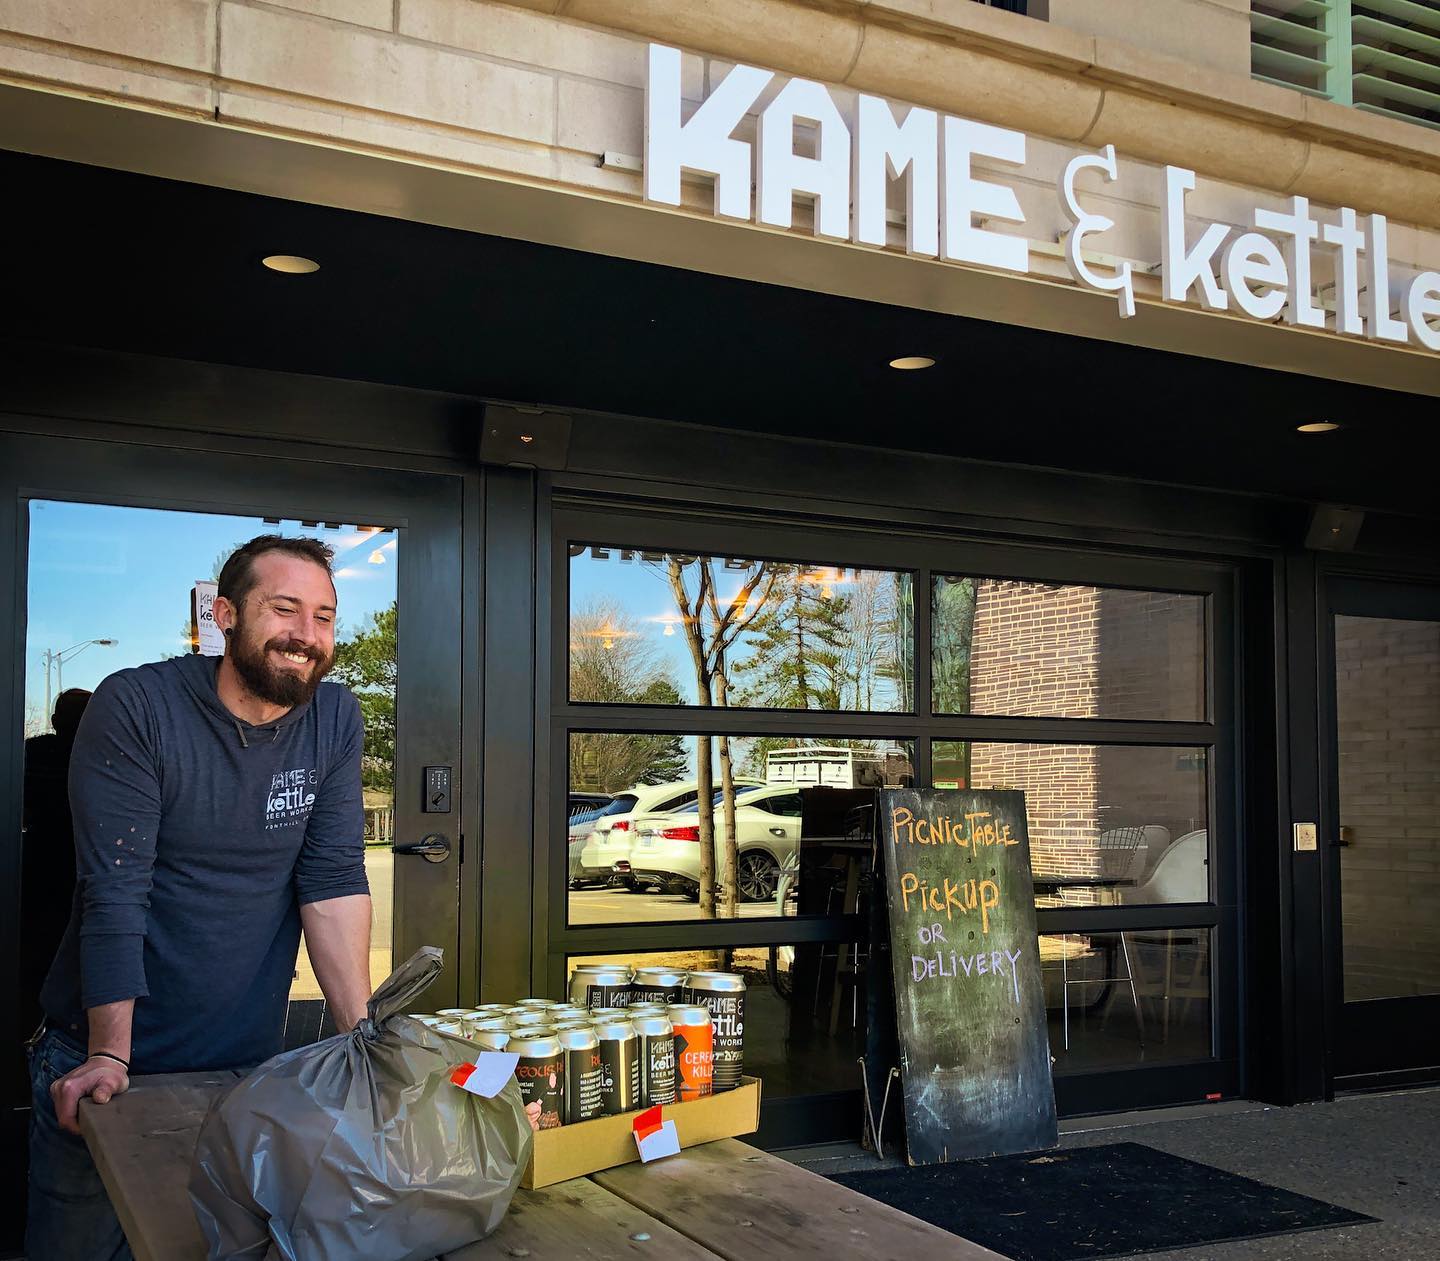 Kame & Kettle Beer Works ‘PICNIC TABLE pickups and deliveries’